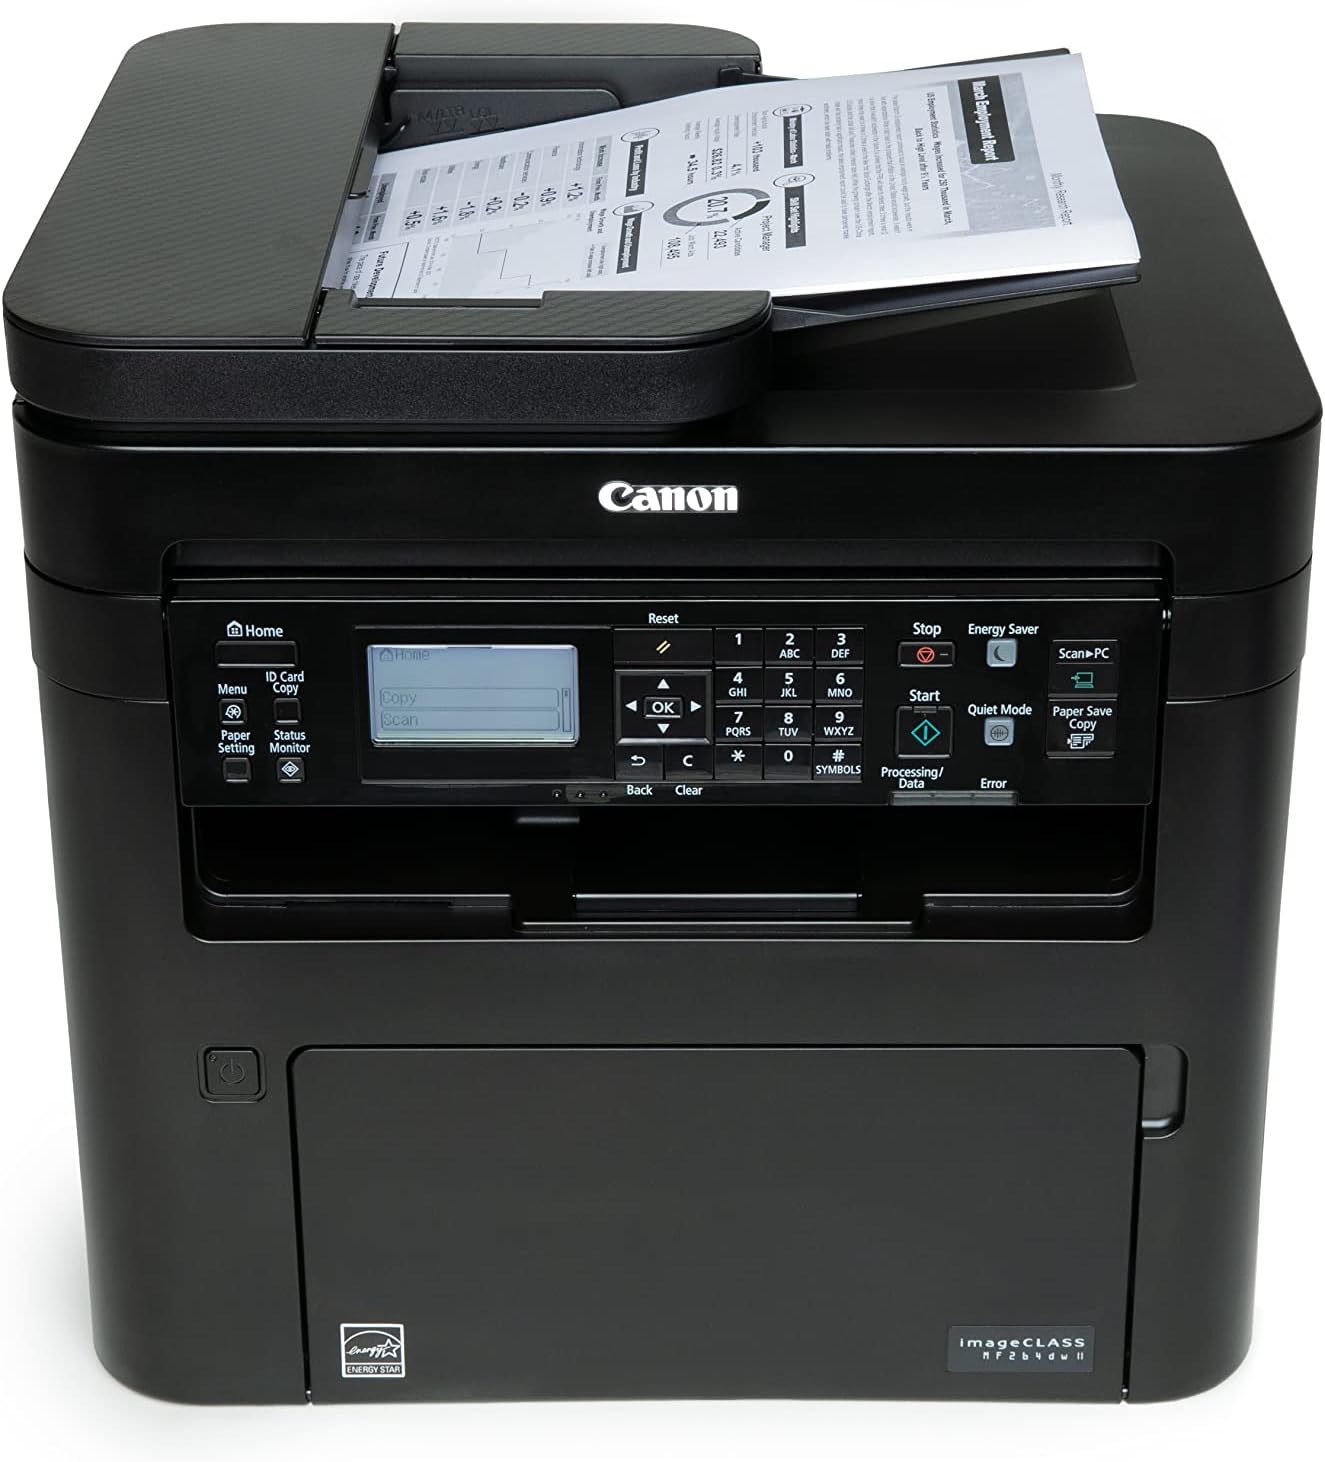 Canon imageCLASS MF264dw II Wireless Monochrome Laser Printer $149.99 + Free Shipping